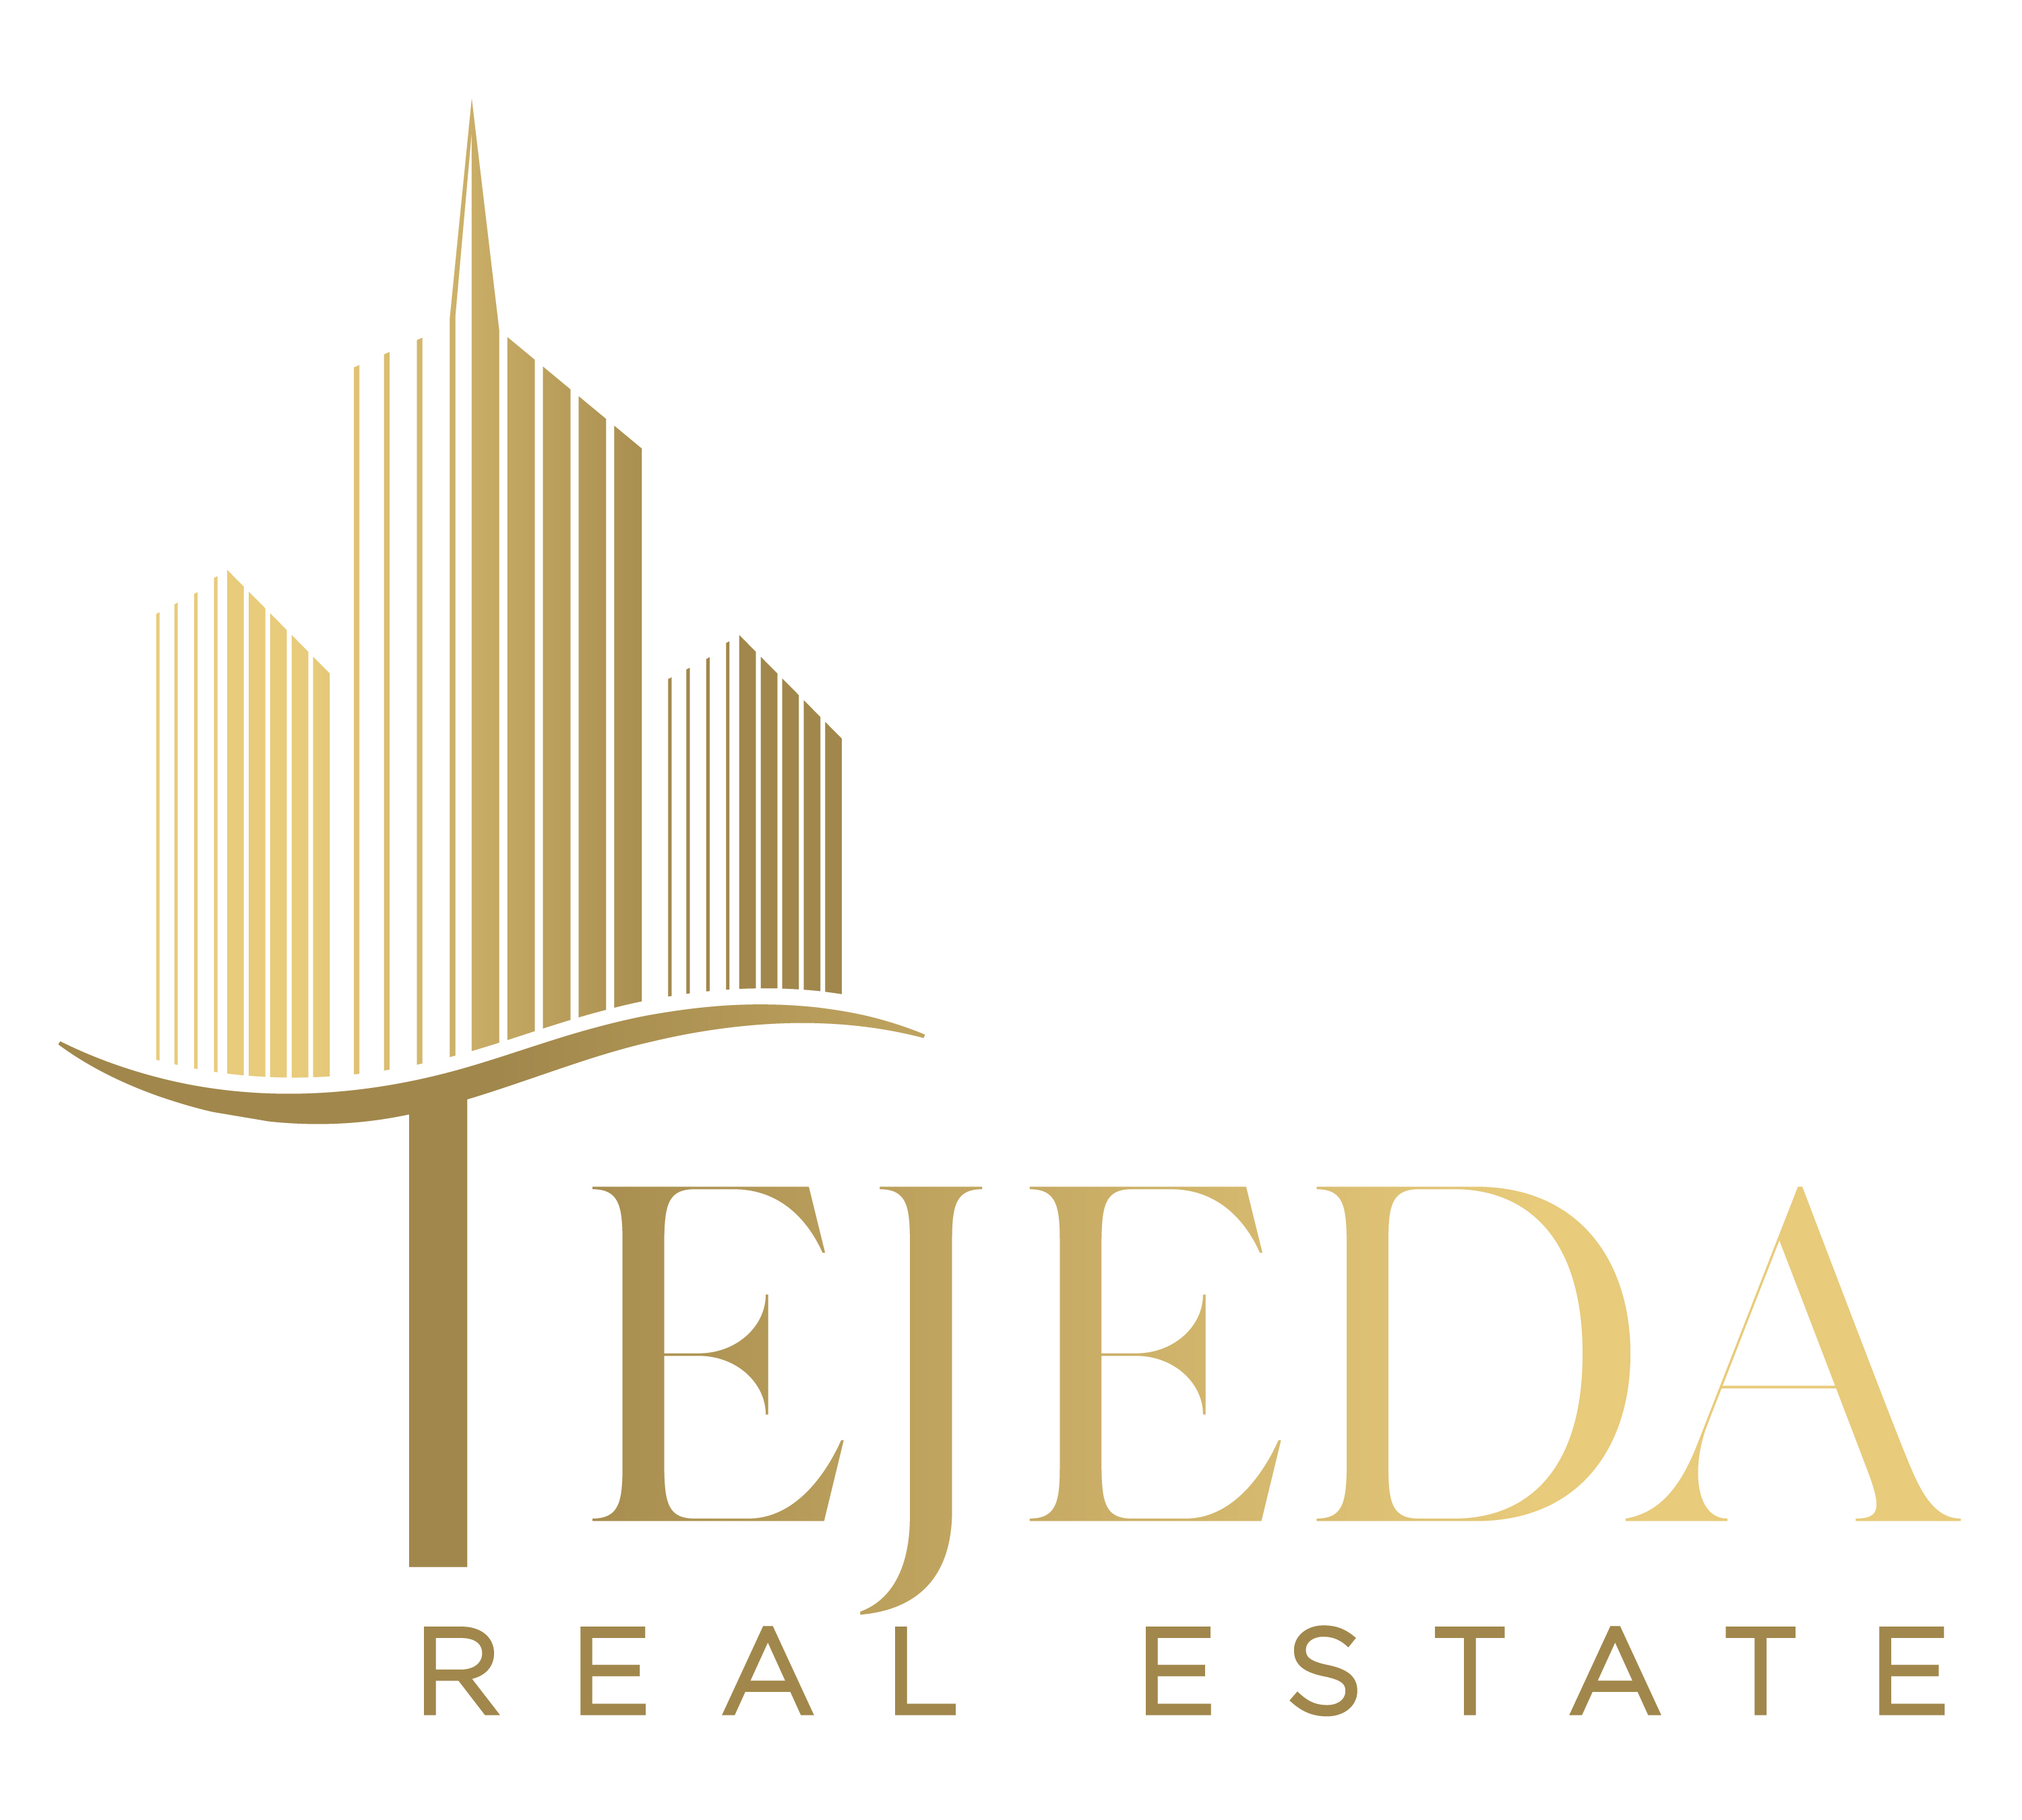 Tejeda Real Estate Inc. 